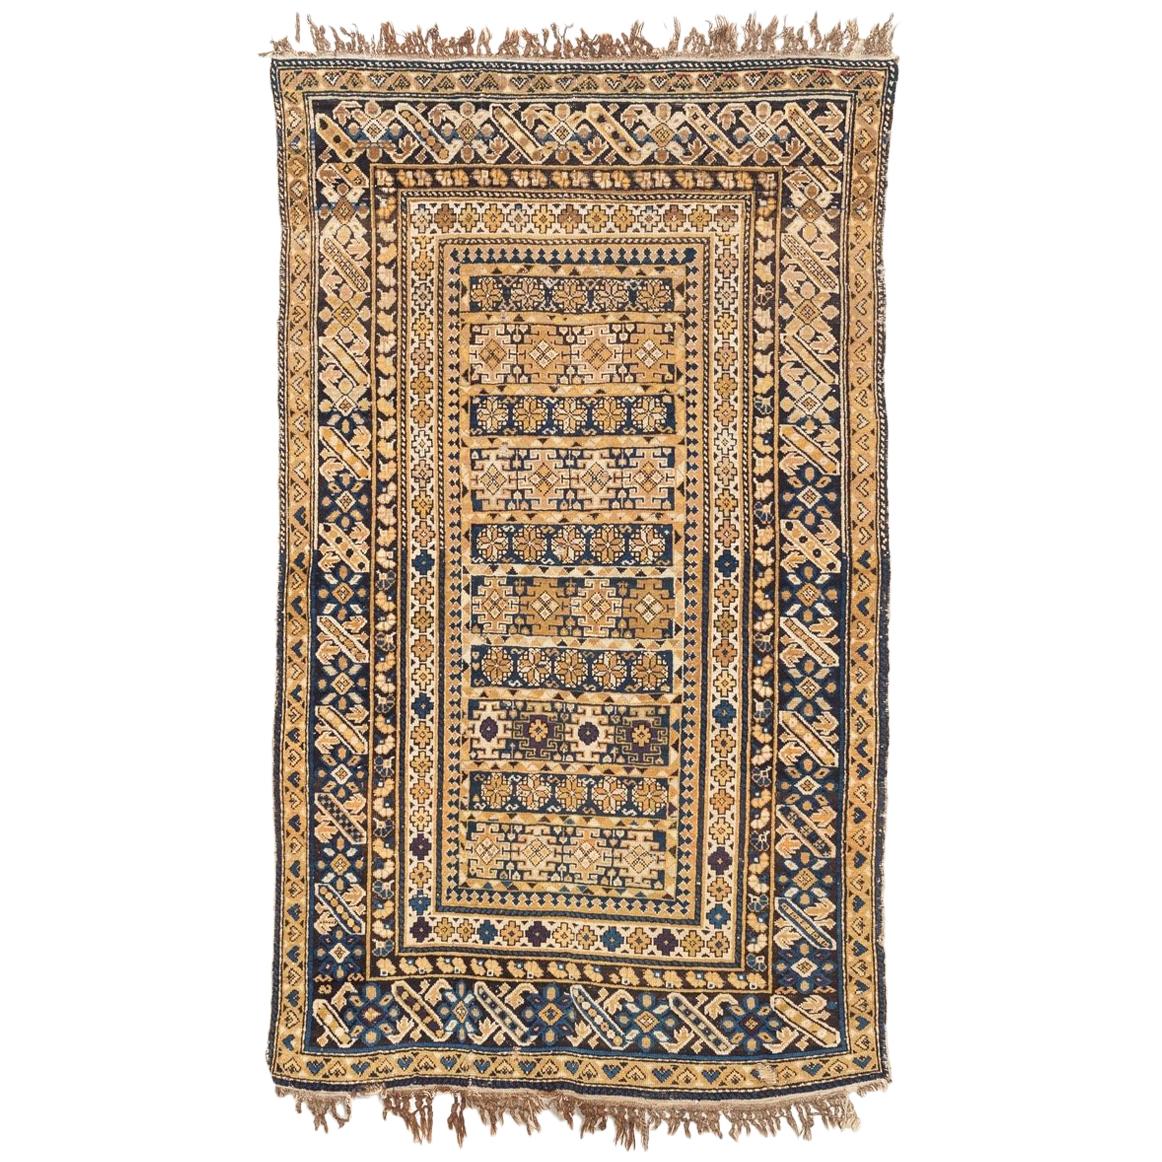 Antique Kuba Caucasian Tan and Blue Handmade Wool Floor Rug, Late 1800s For Sale